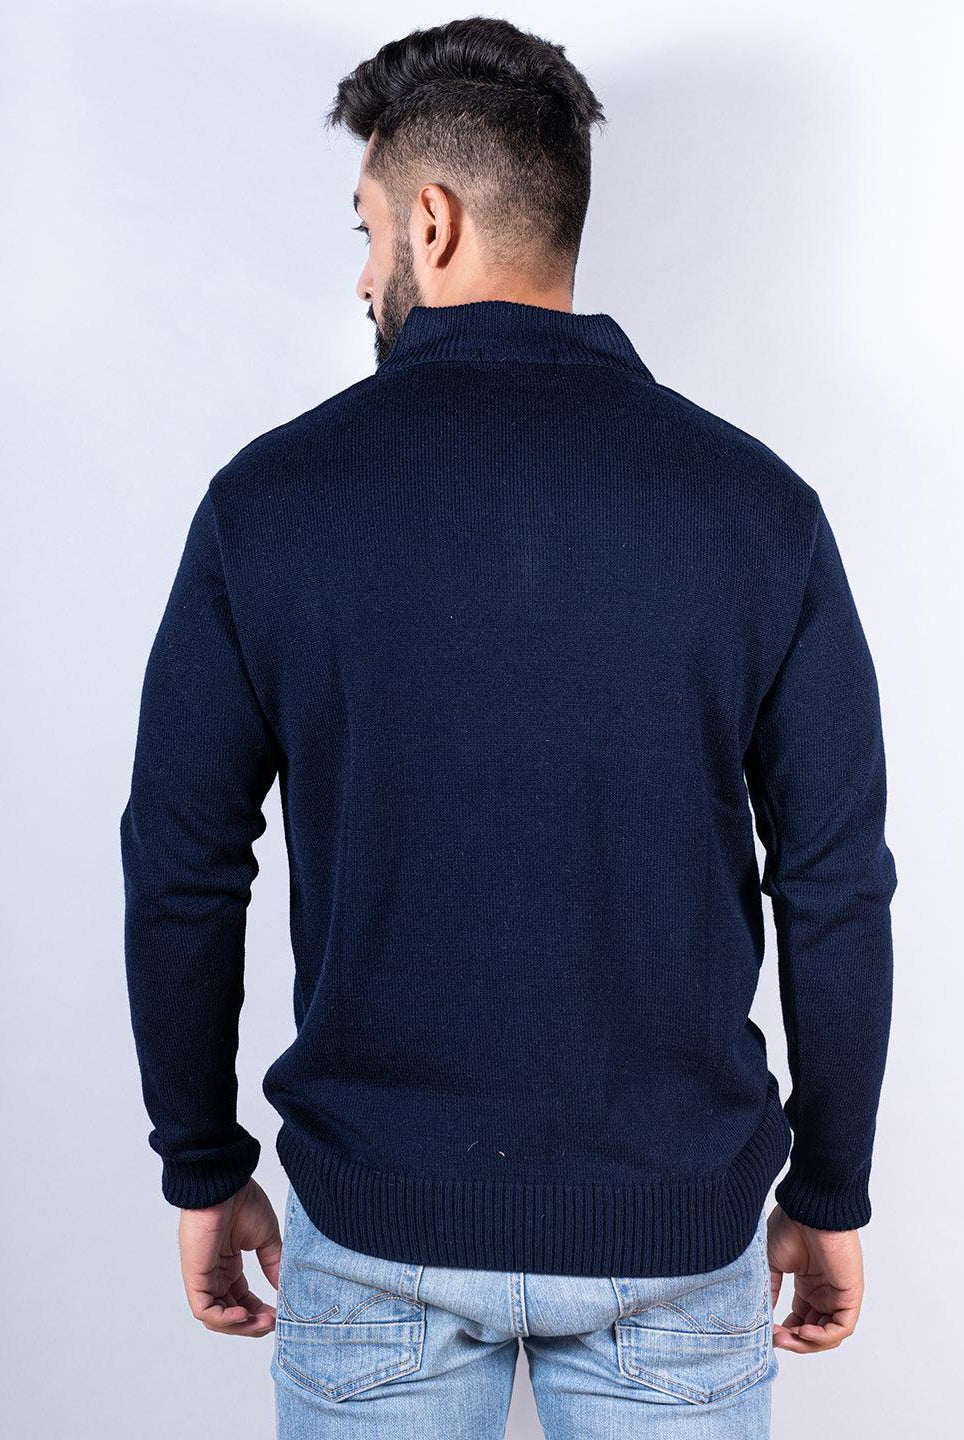 Navy Blue Color Classic Zipper Men's Sweater - Tistabene